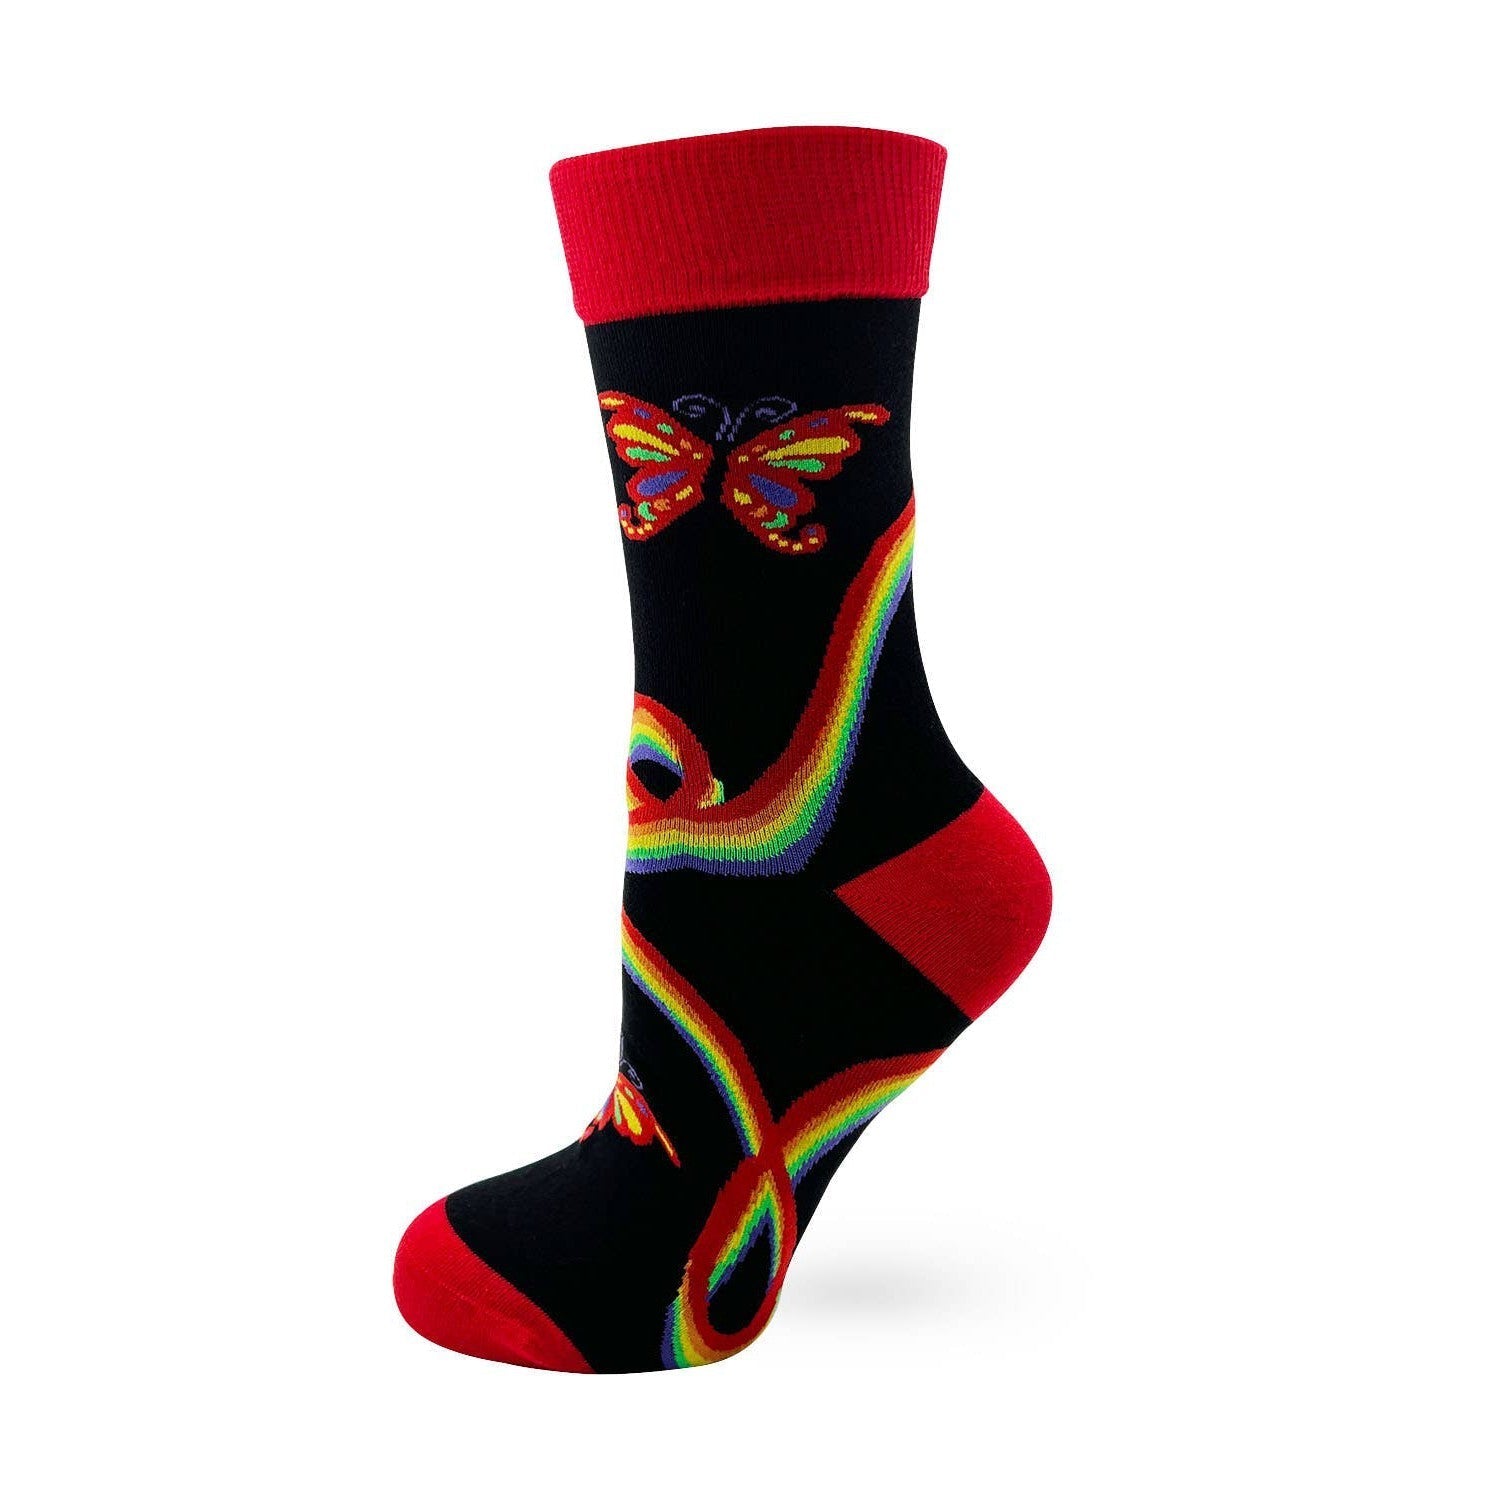 Anti Social Butterfly Women's Crew Socks | Black and Red Ladies Novelty Socks